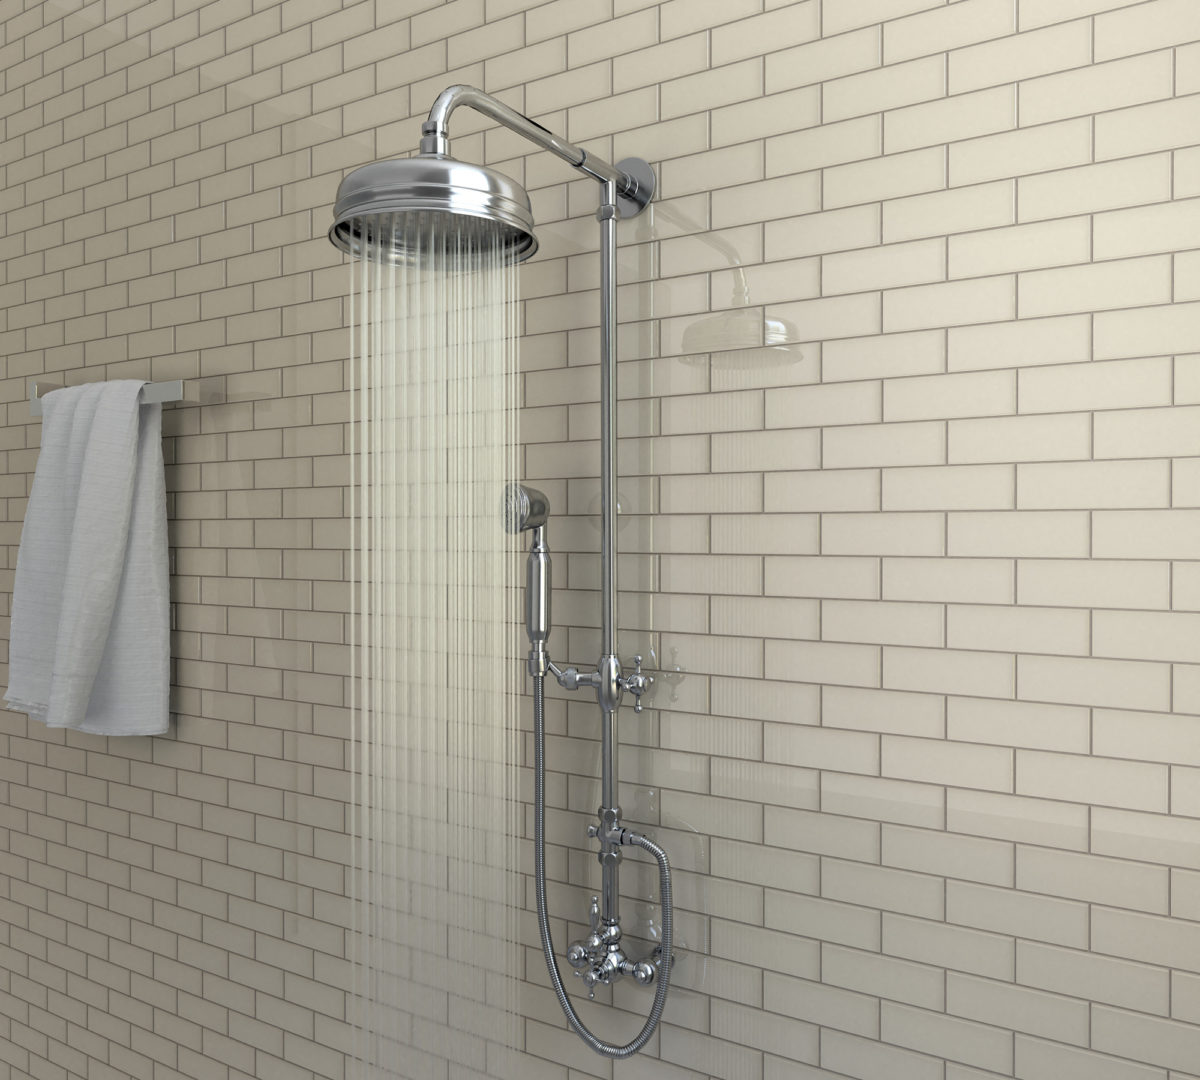 Bamboo 2x6 Backsplash Tile in Bathroom Shower